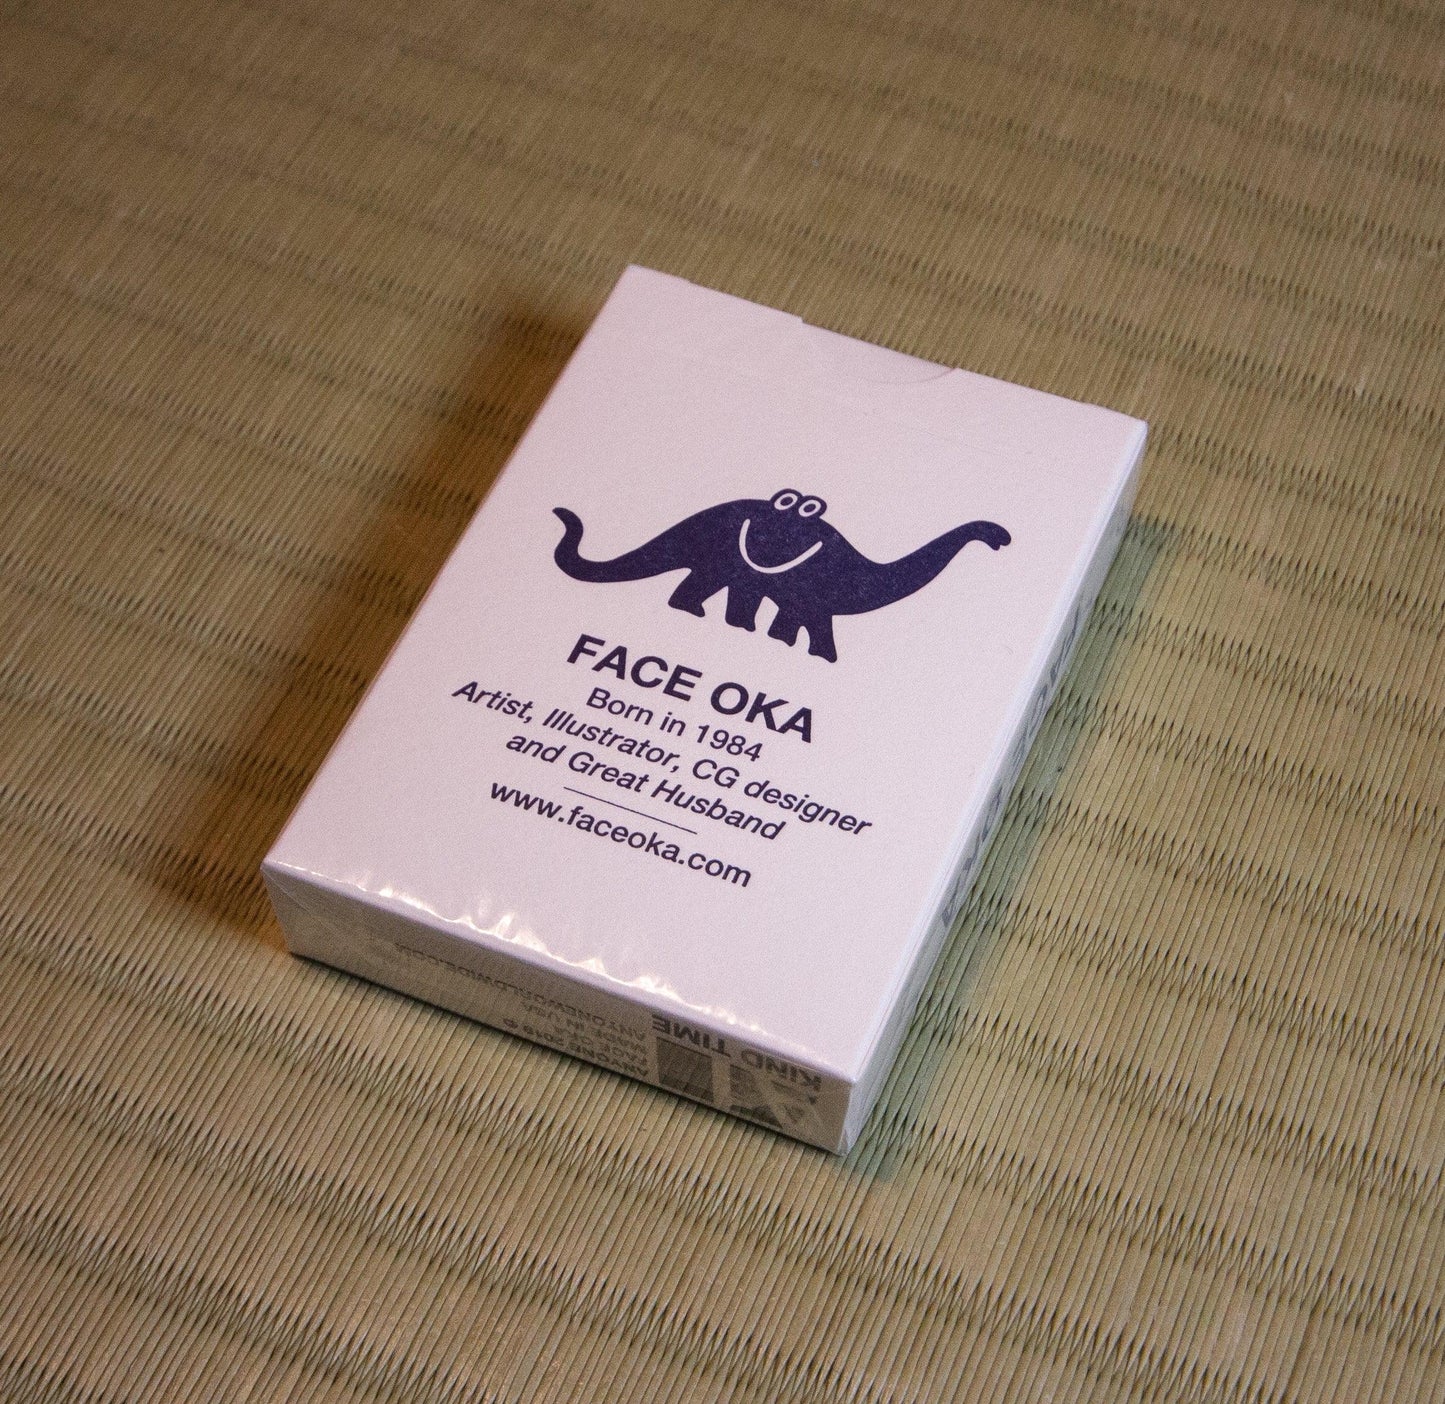 Kind Time (Face Oka) Playing Cards by Anyone Worldwide - Deckita Decks